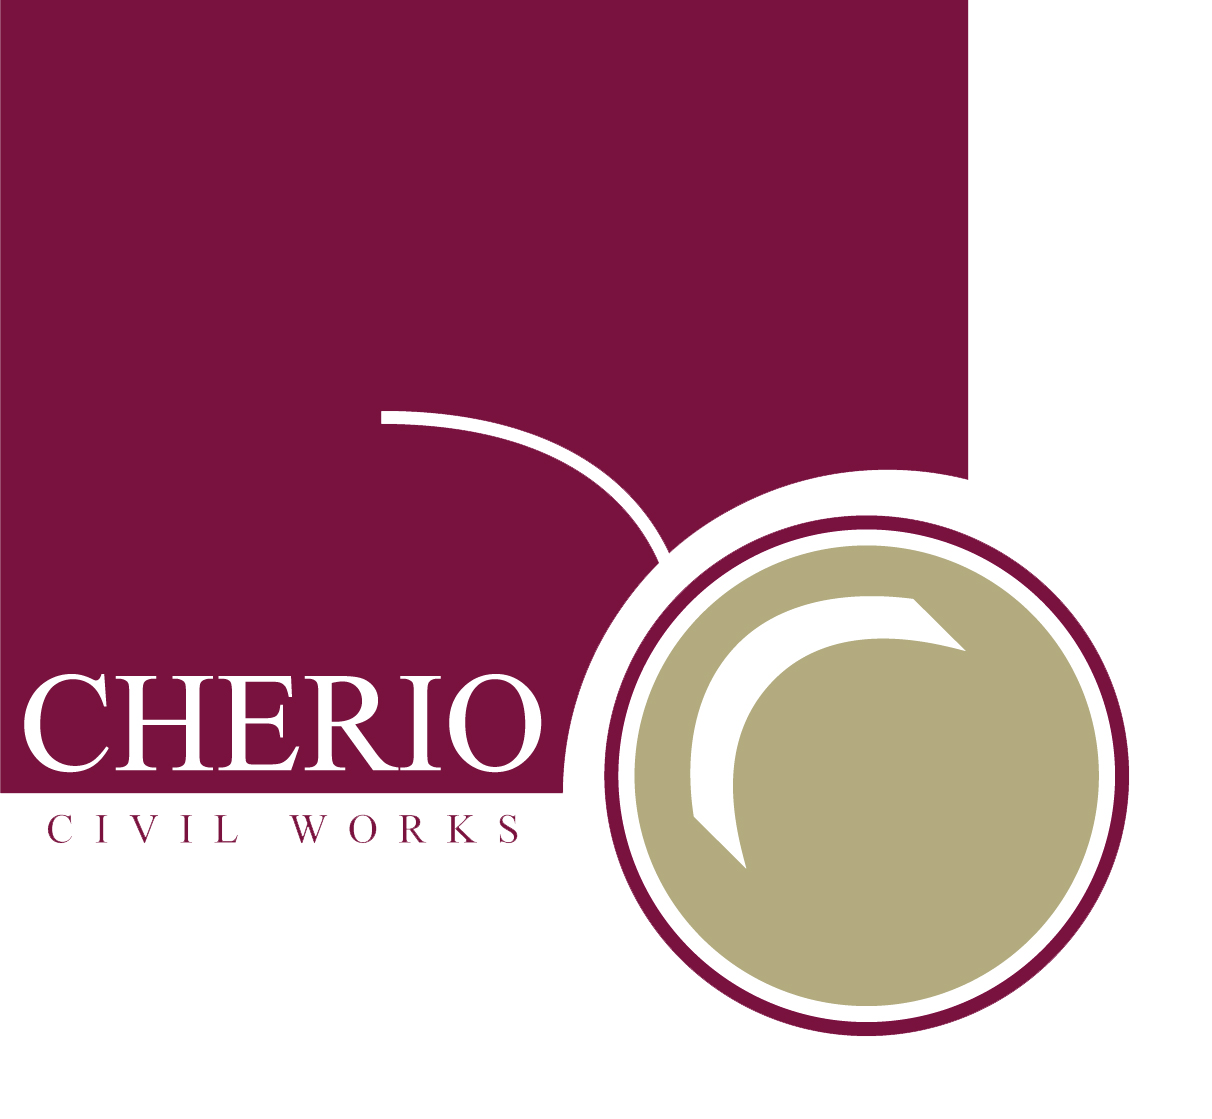 Cherio Civil Works